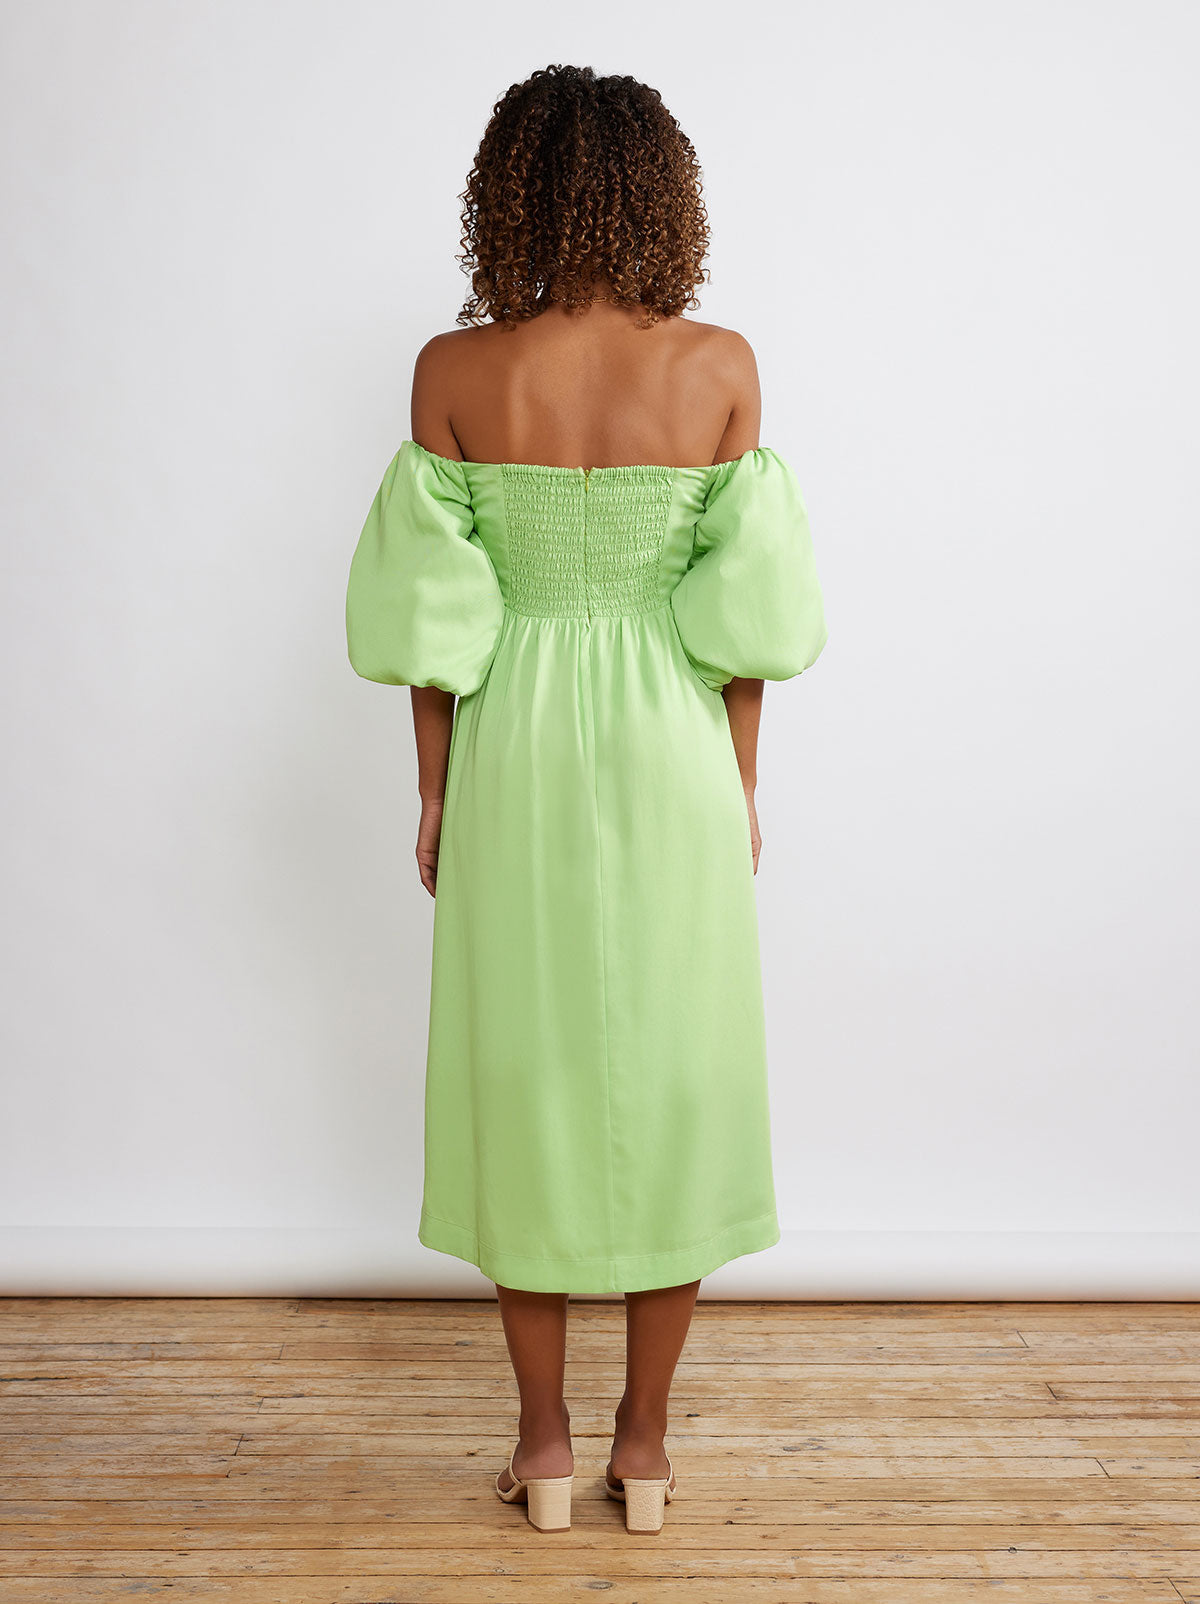 Alexis Green Bardot Dress by KITRI Studio